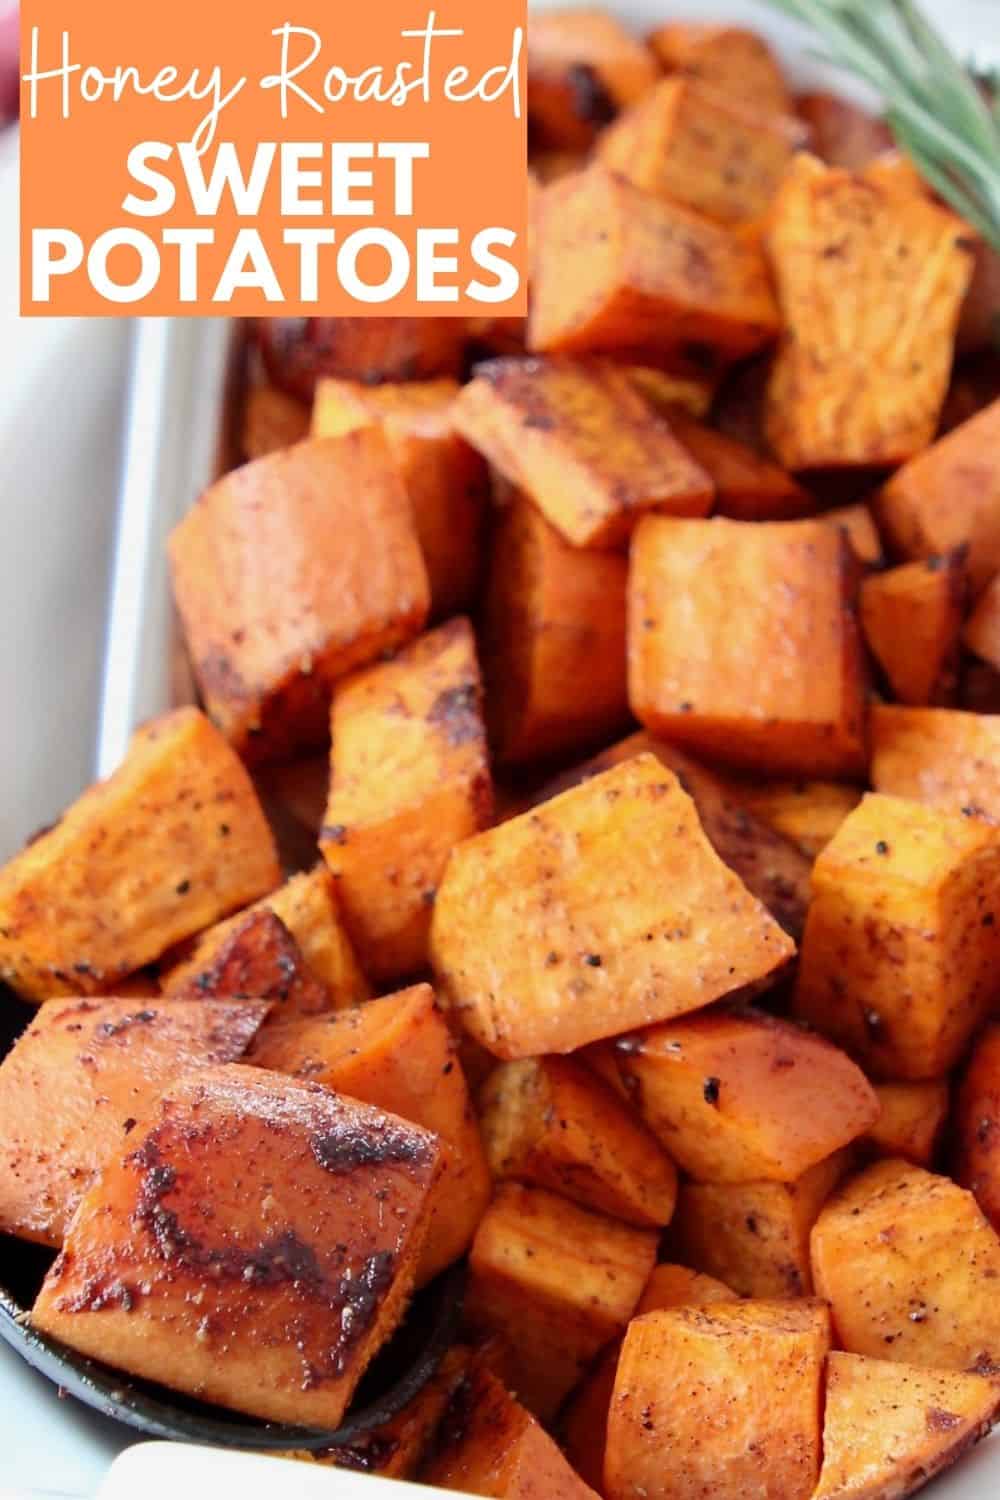 Roasted Sweet Potatoes Recipe with Honey - WhitneyBond.com